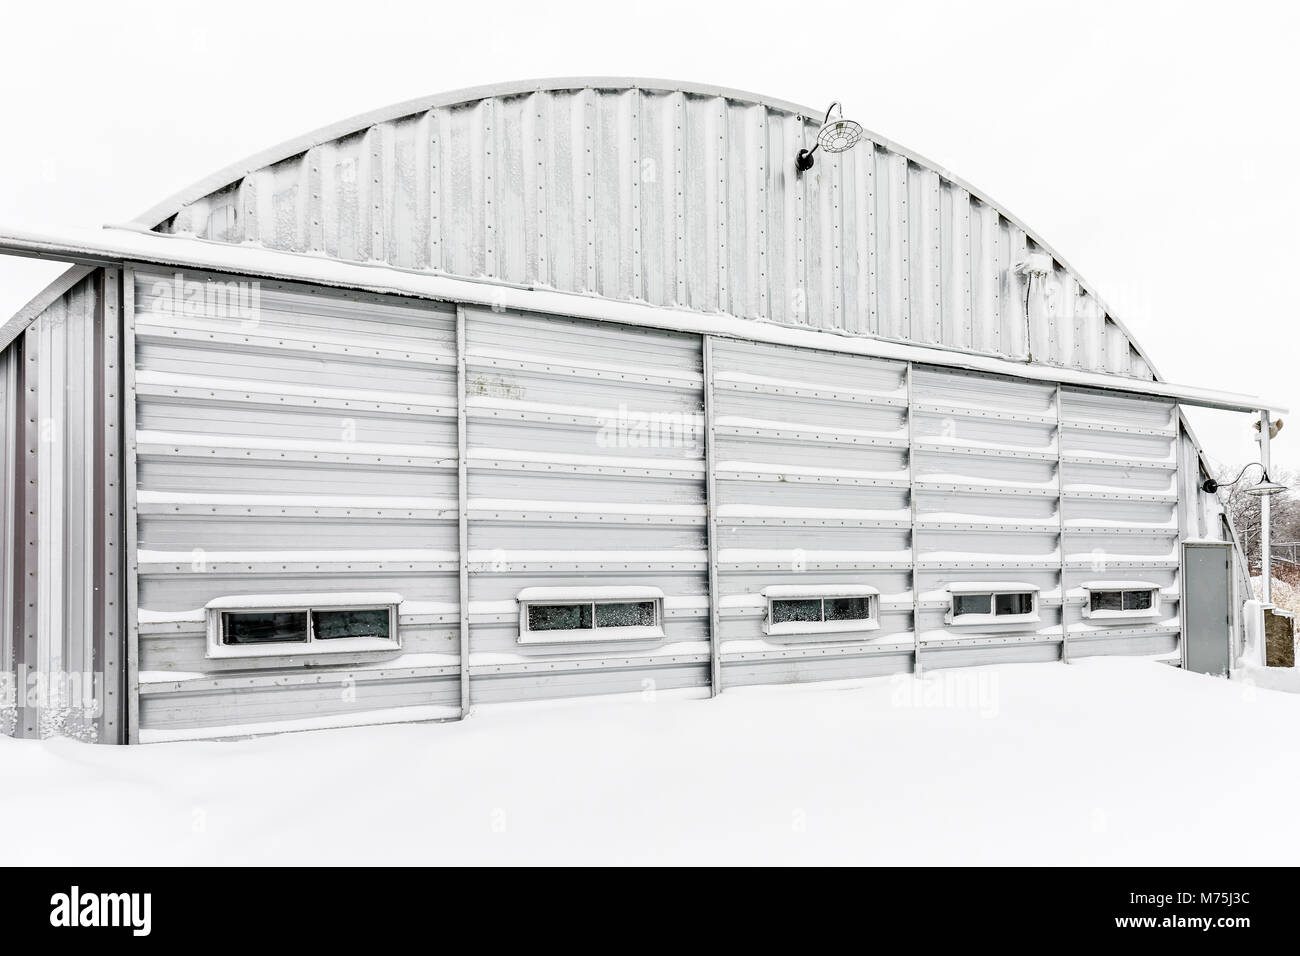 Corrugated metal building, Manitoba, Canada. Stock Photo